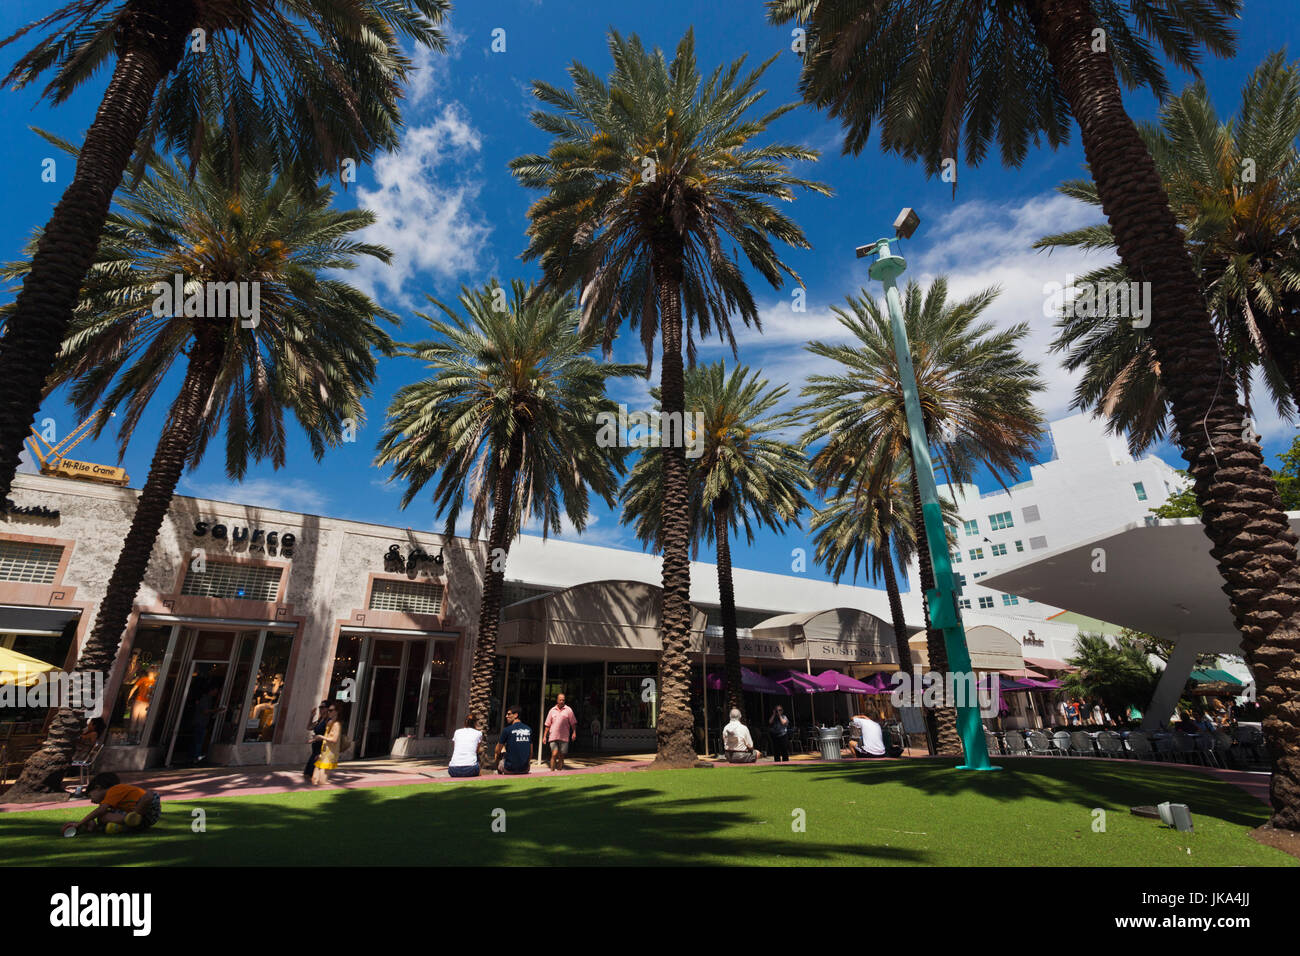 USA, Miami Beach, South Beach, Lincoln Road, shops along pedestrian street Stock Photo